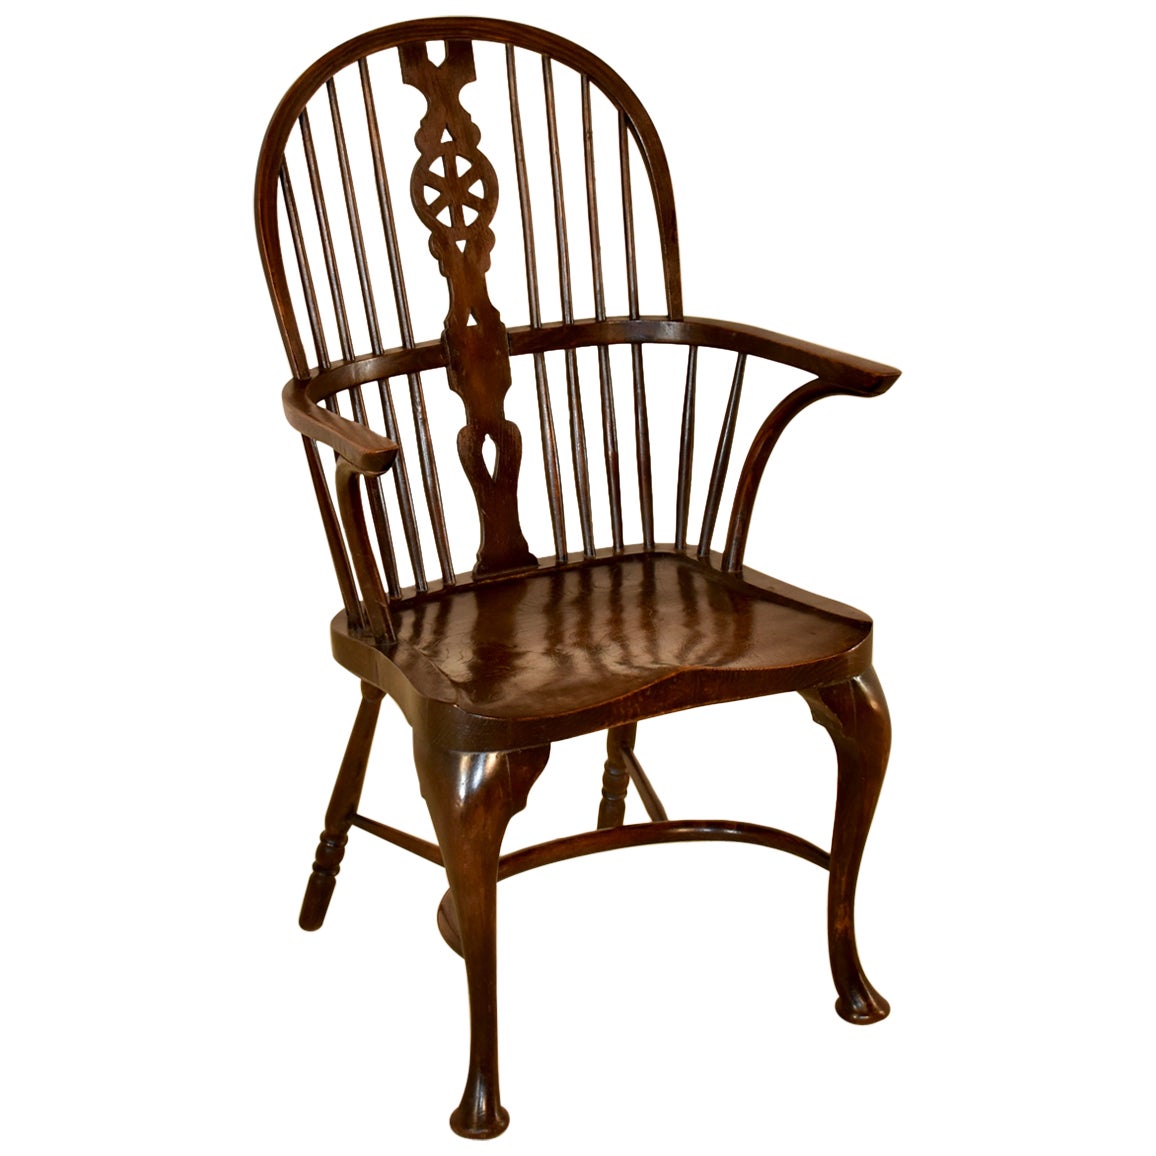 CIRCA 1900 Englischer Double Bow Windsor Chair